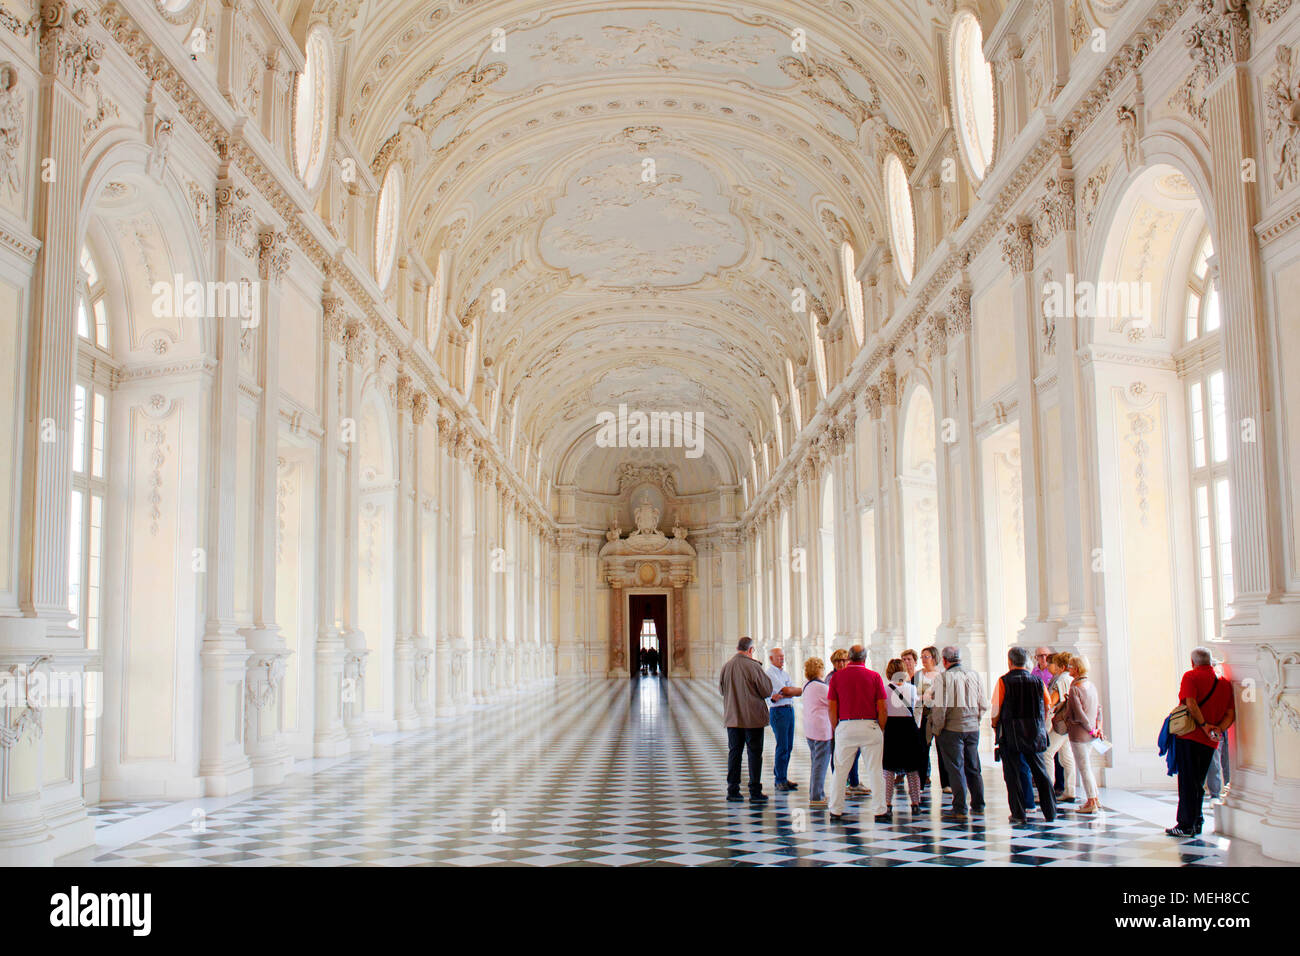 Die Große Halle/Galleria Grande, Reggia di Venaria Reale/Palast von Venaria, Venaria Reale, Turin, Piemont, Italien Stockfoto